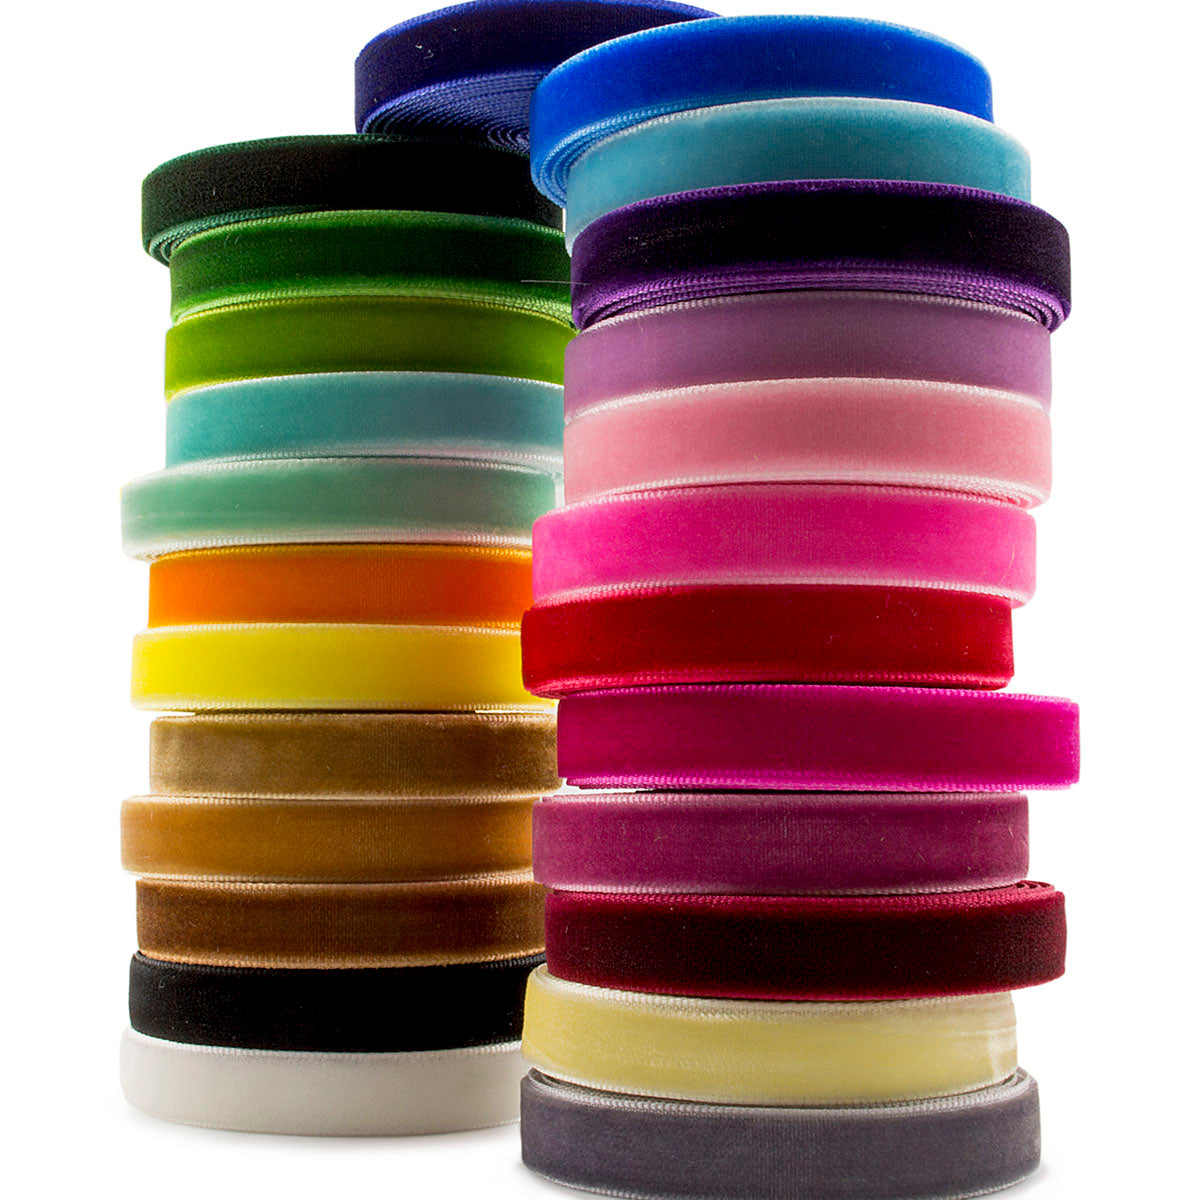 Chenkou Craft 30 Yards 3/8 Velvet Ribbon Total 30 Colors Assorted Lots  Bulk (Multicolored, 3/8(10mm))